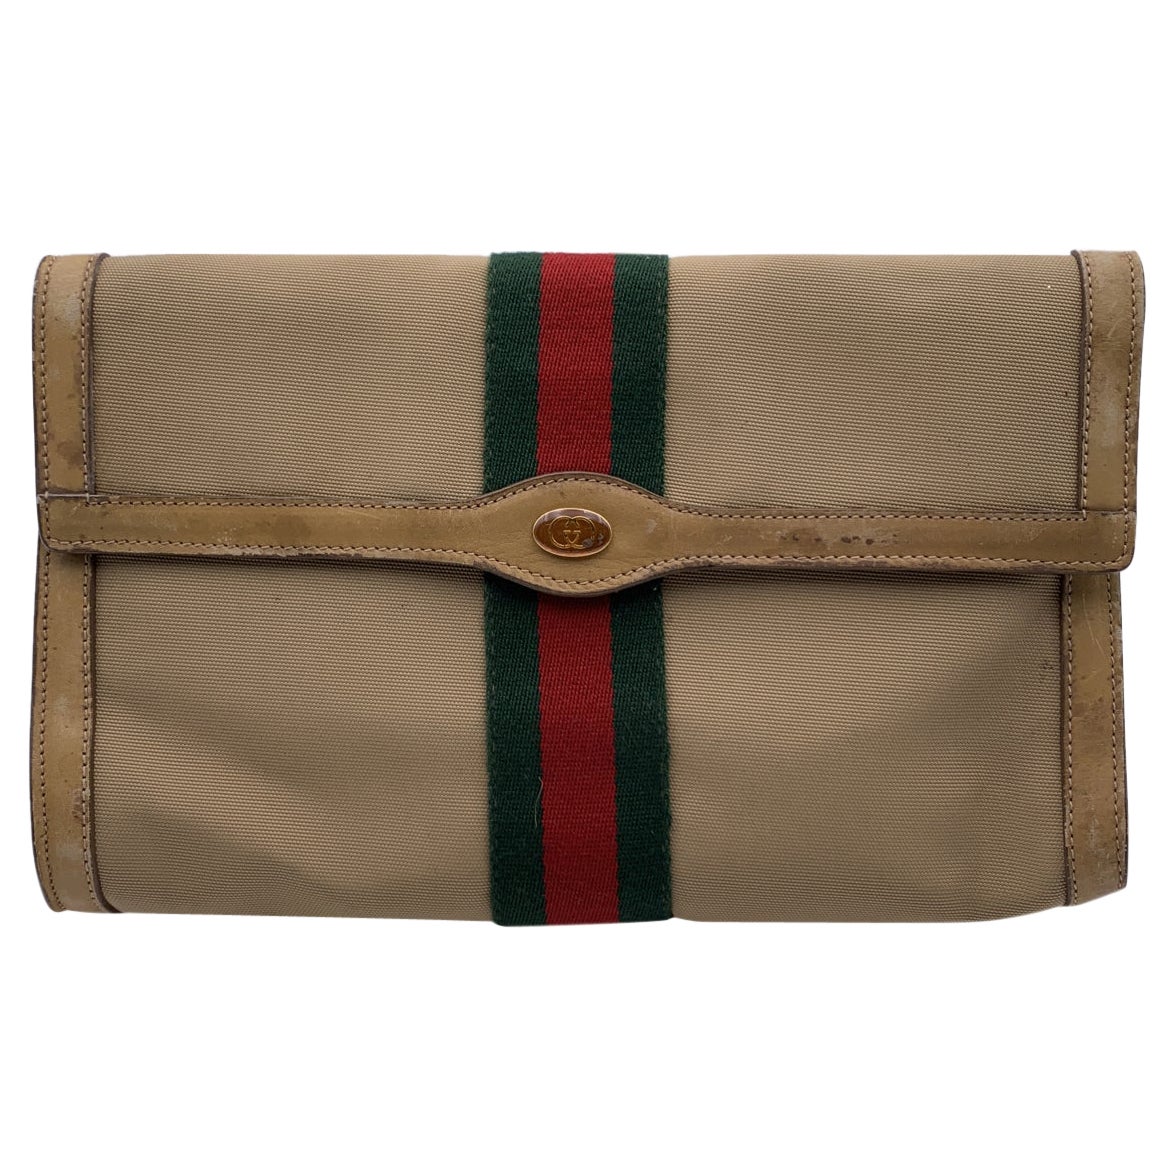 Gucci Vintage Beige Canvas Web Flap Cosmetic Bag Clutch Handbag